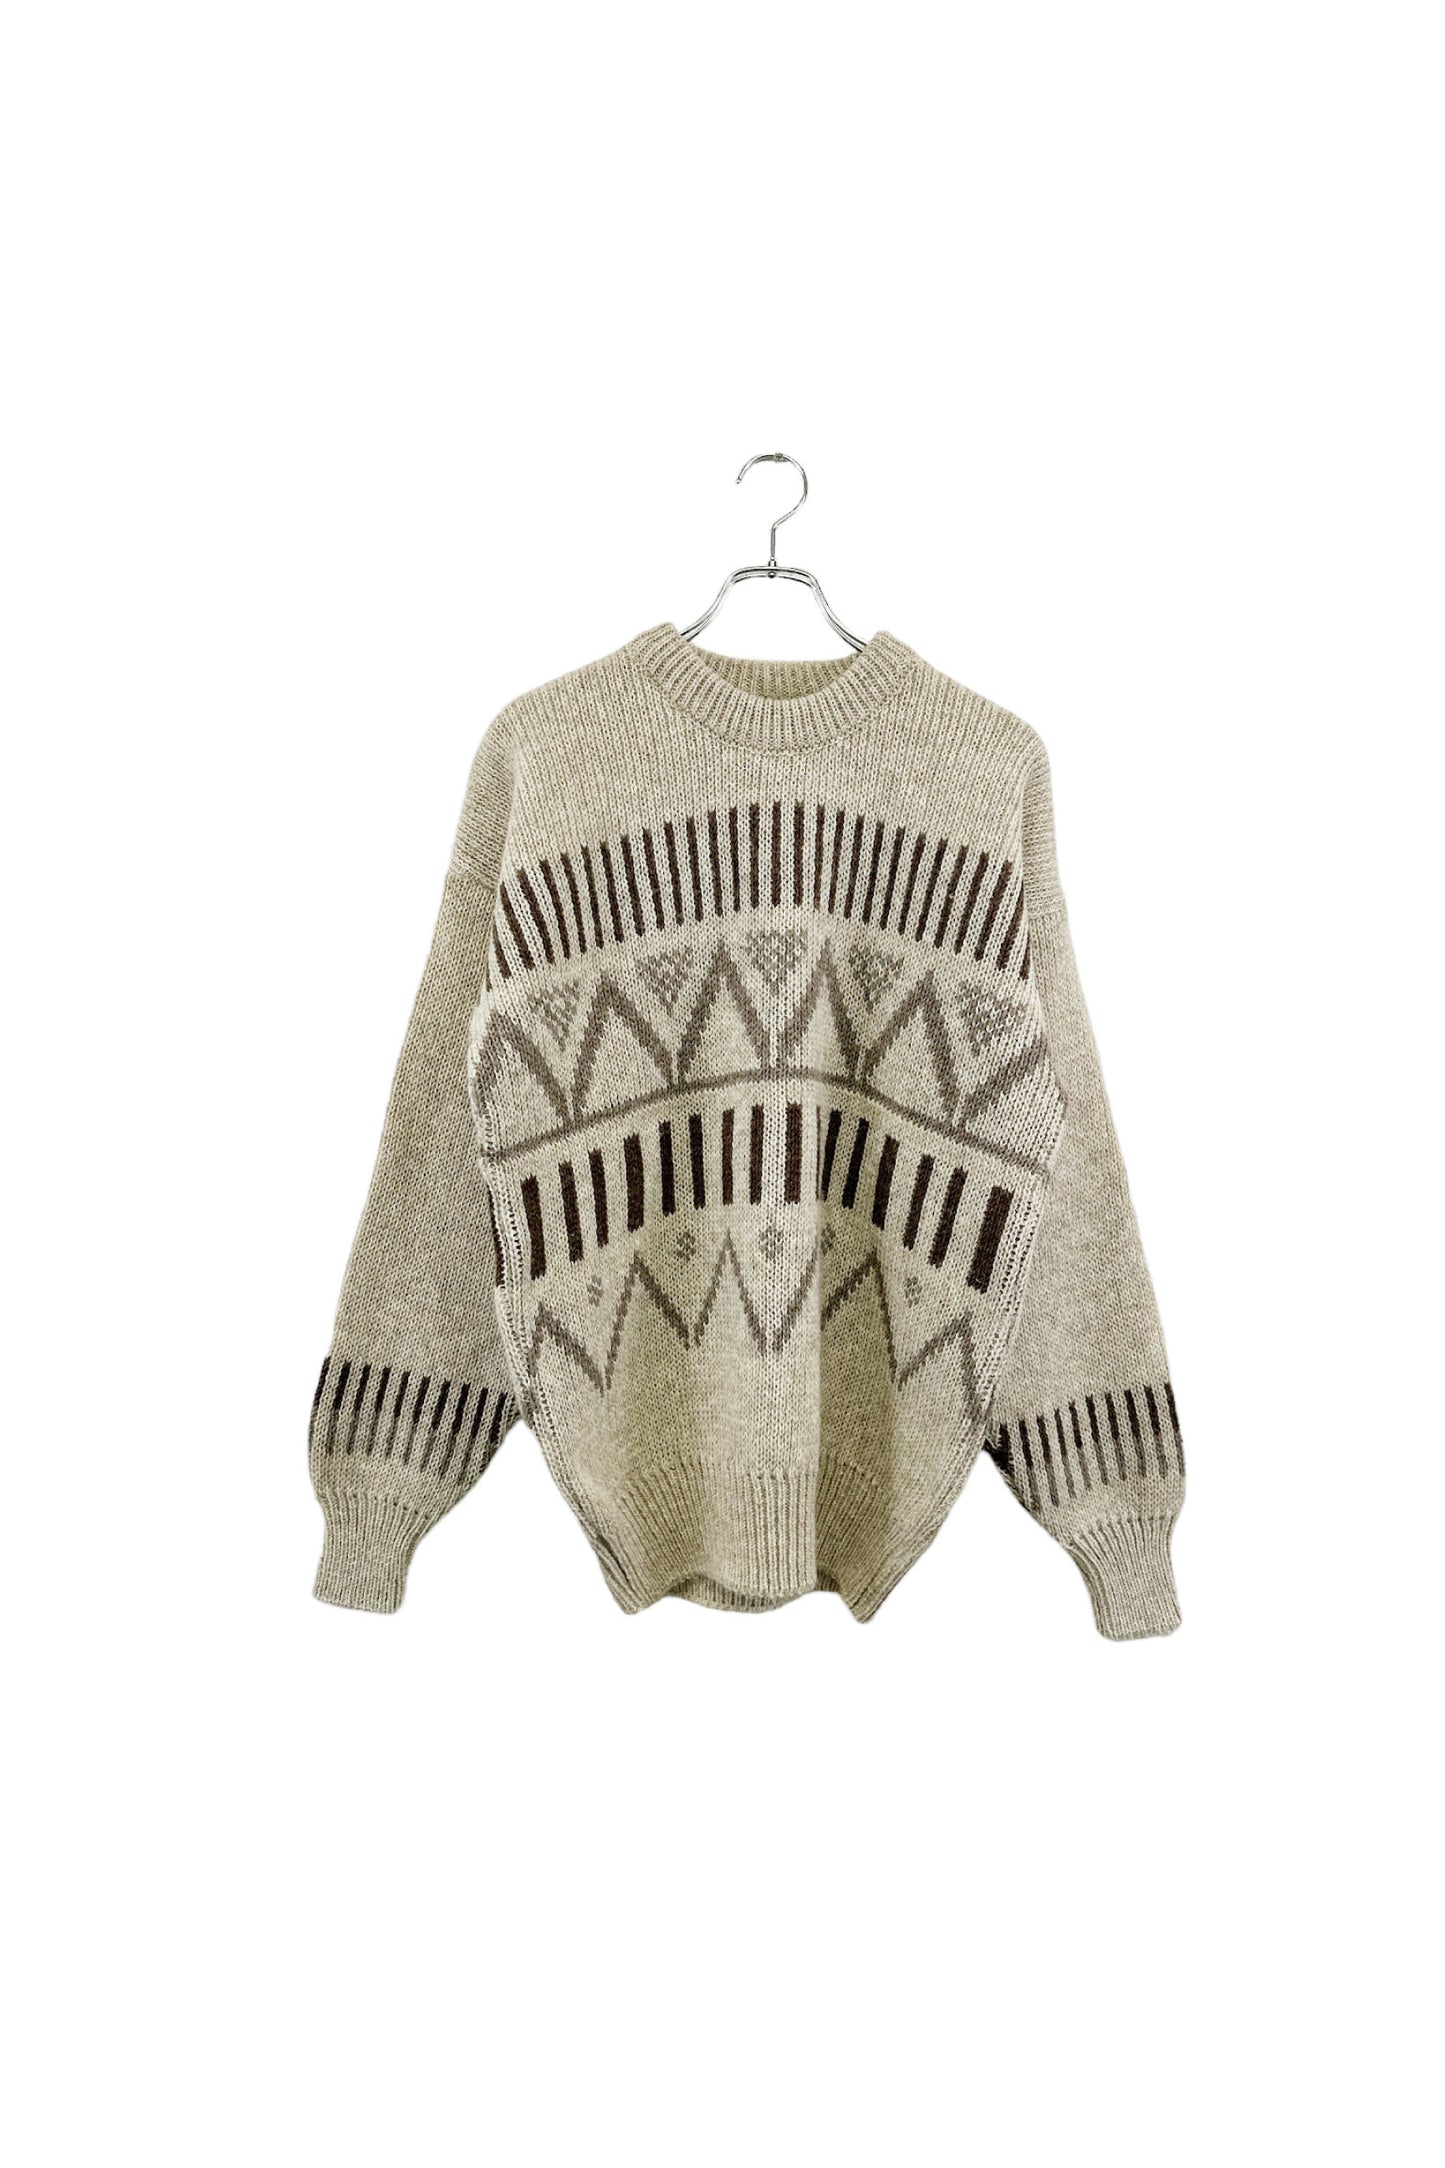 80's Norsewear sweater